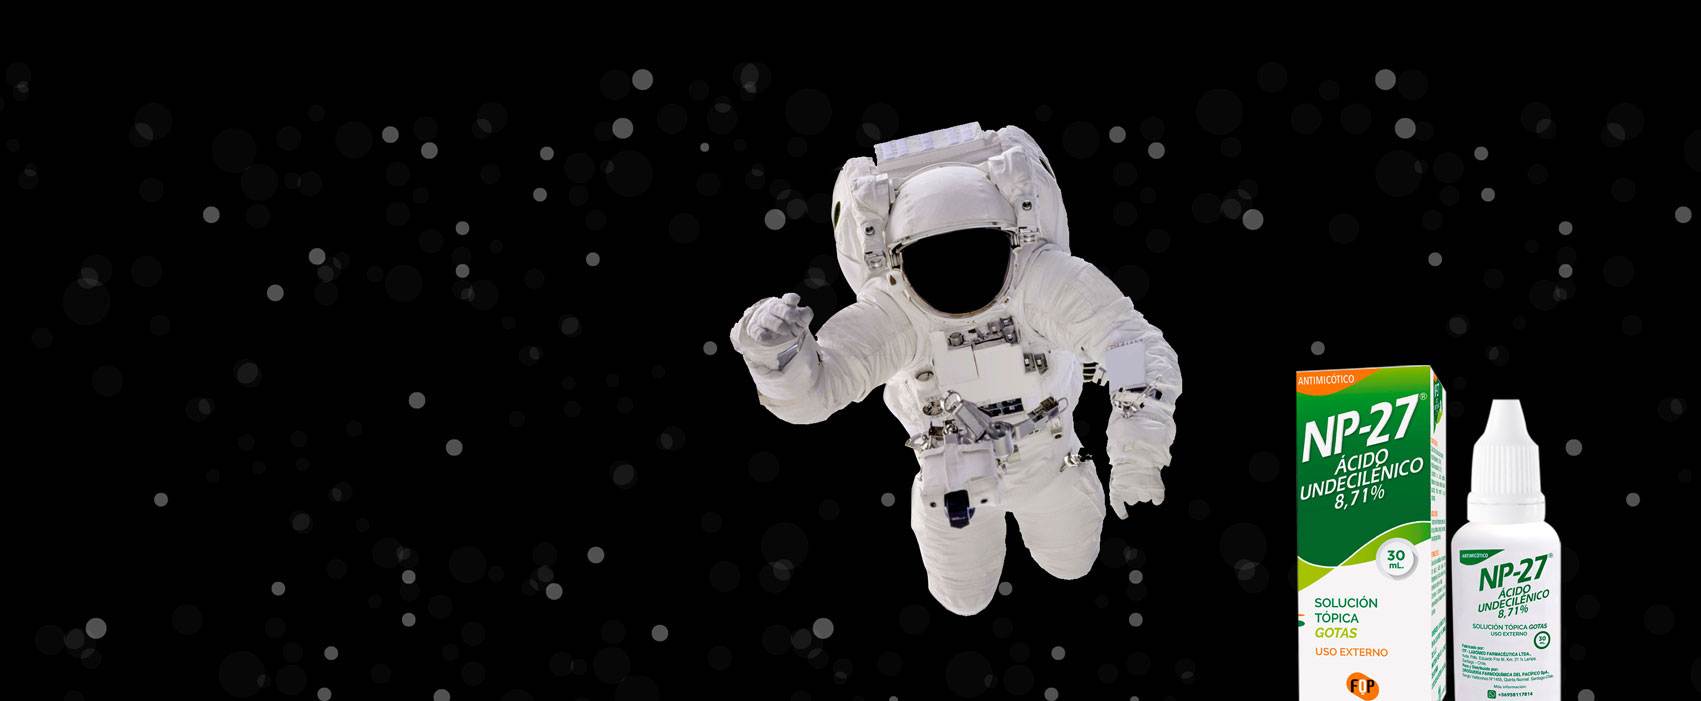 imagen astronauta